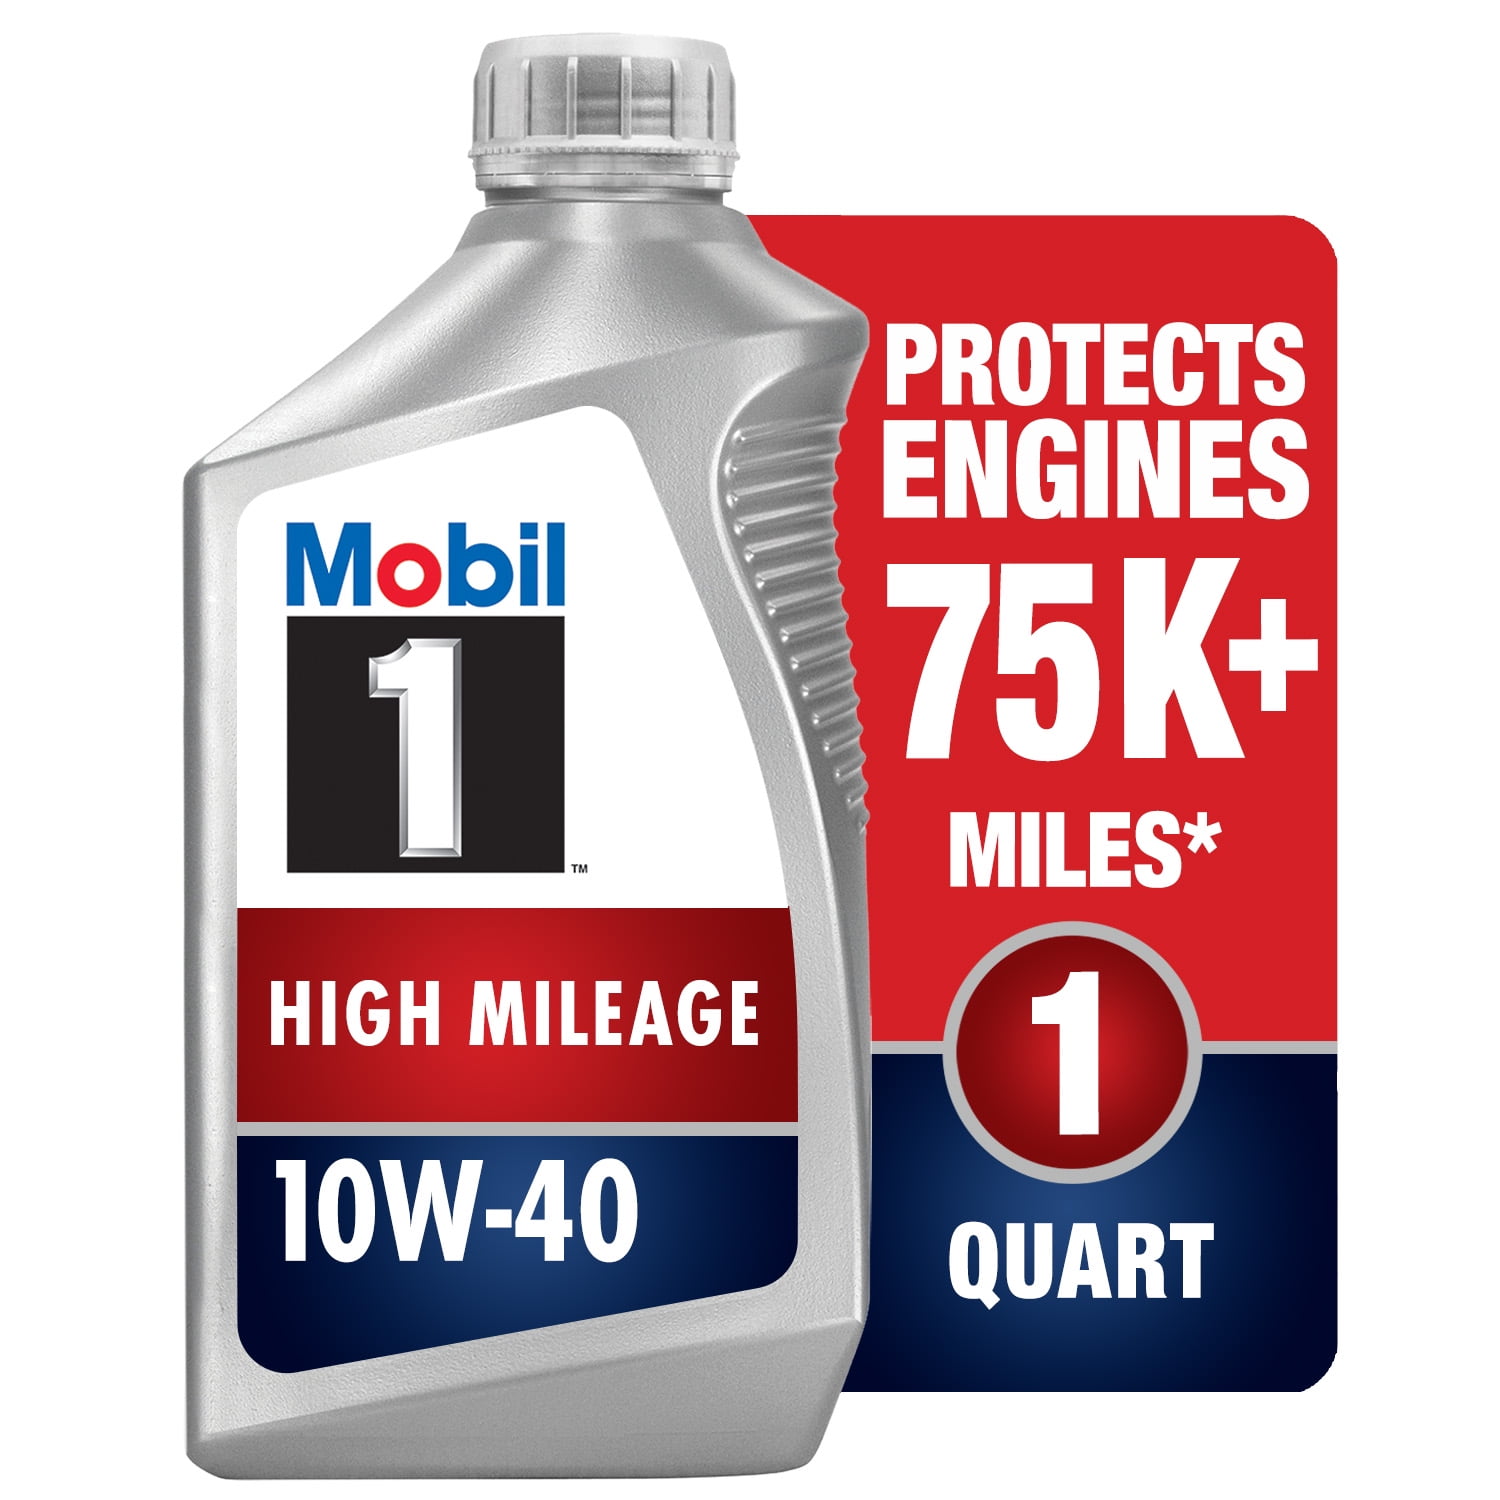 mobil-1-high-mileage-full-synthetic-motor-oil-10w-40-1-qt-walmart